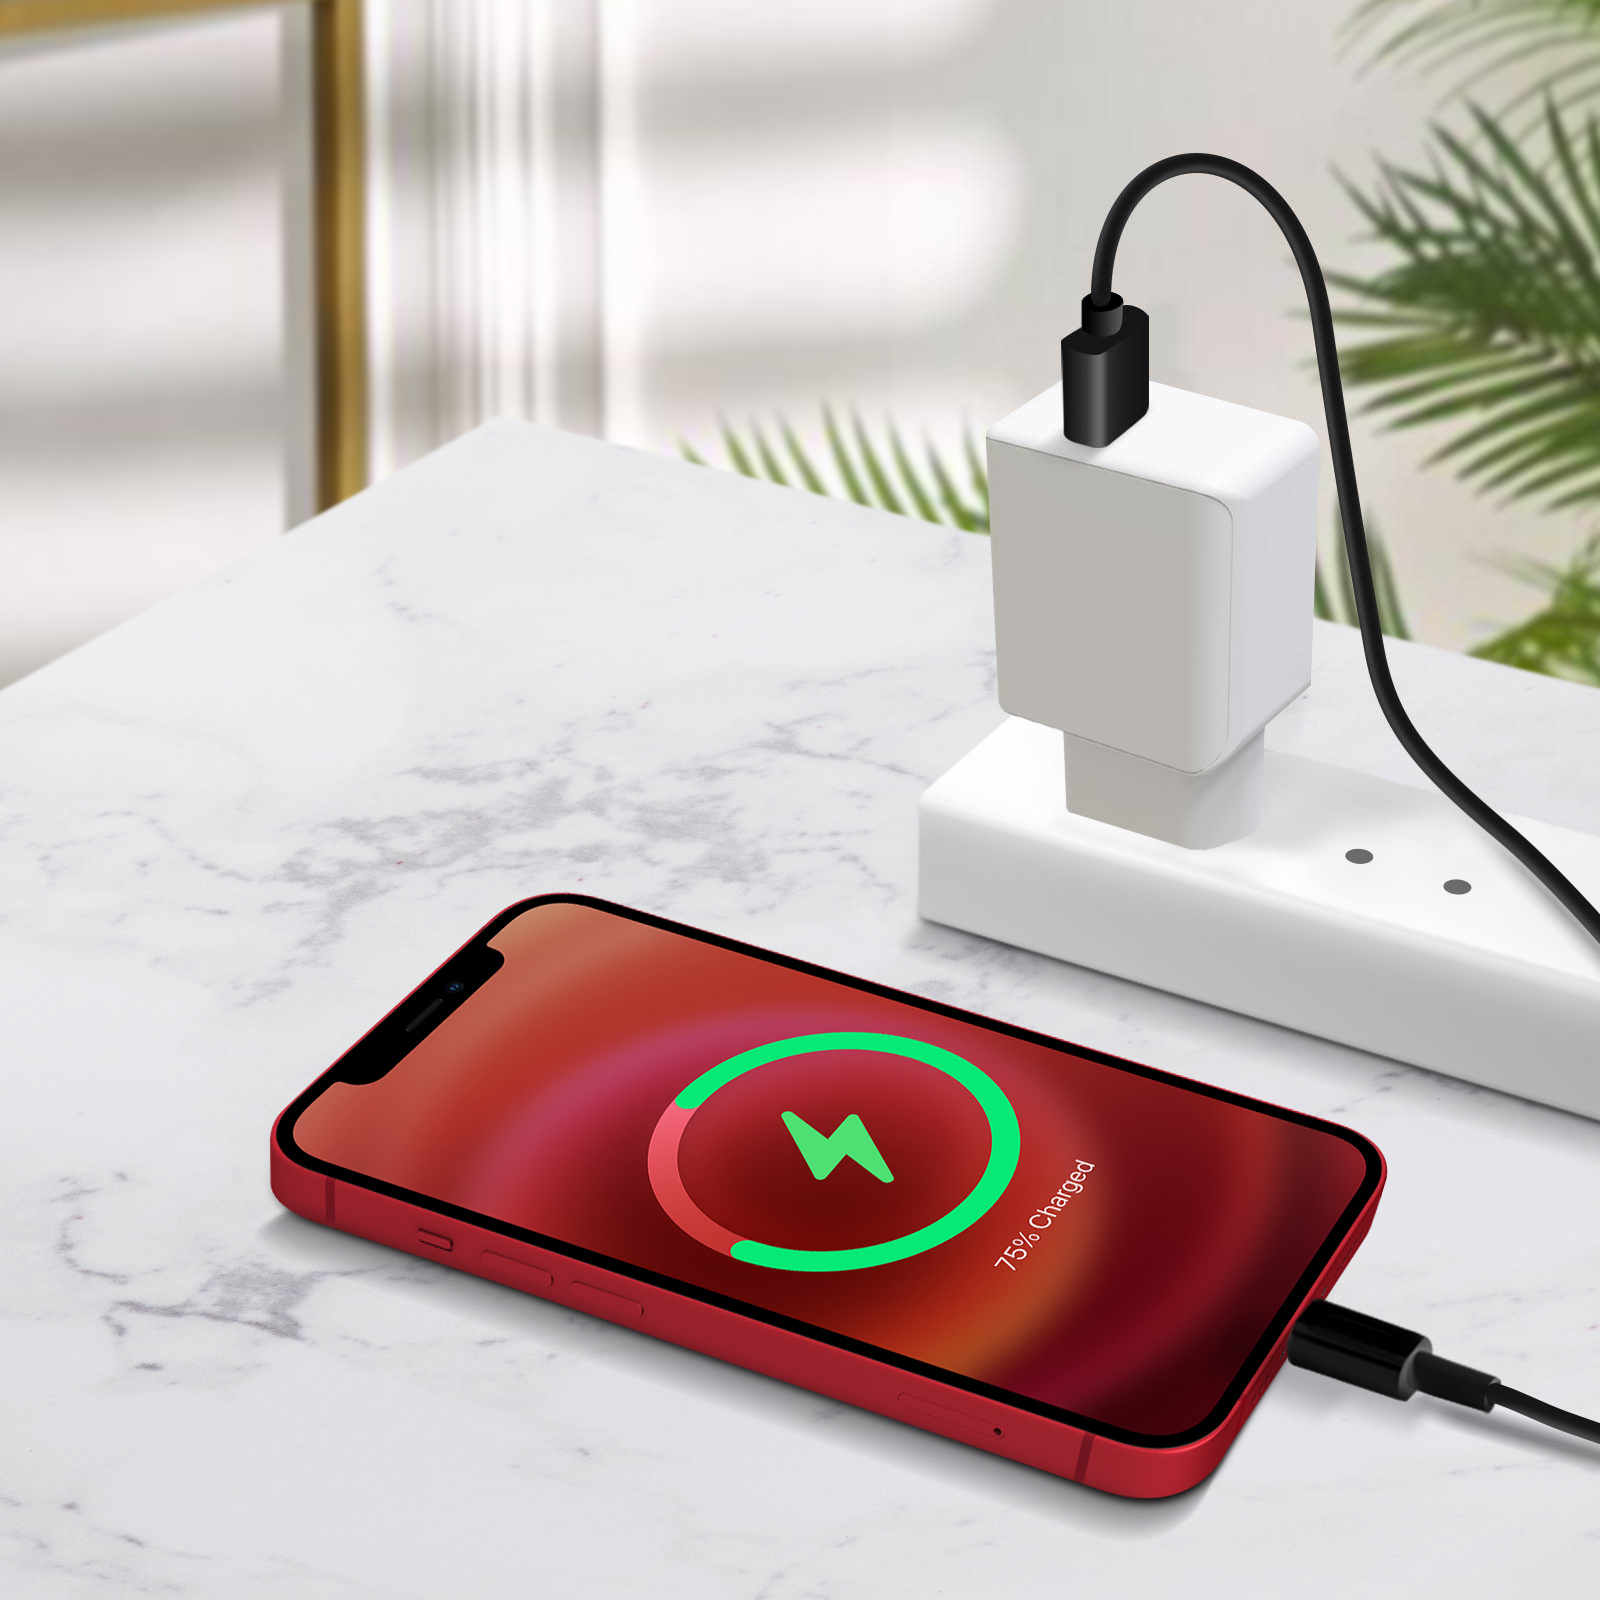 Auriculares Cable iPhone Lightning, Coneción Bluetooth con Kit Manos Libres  – Blanco - Spain